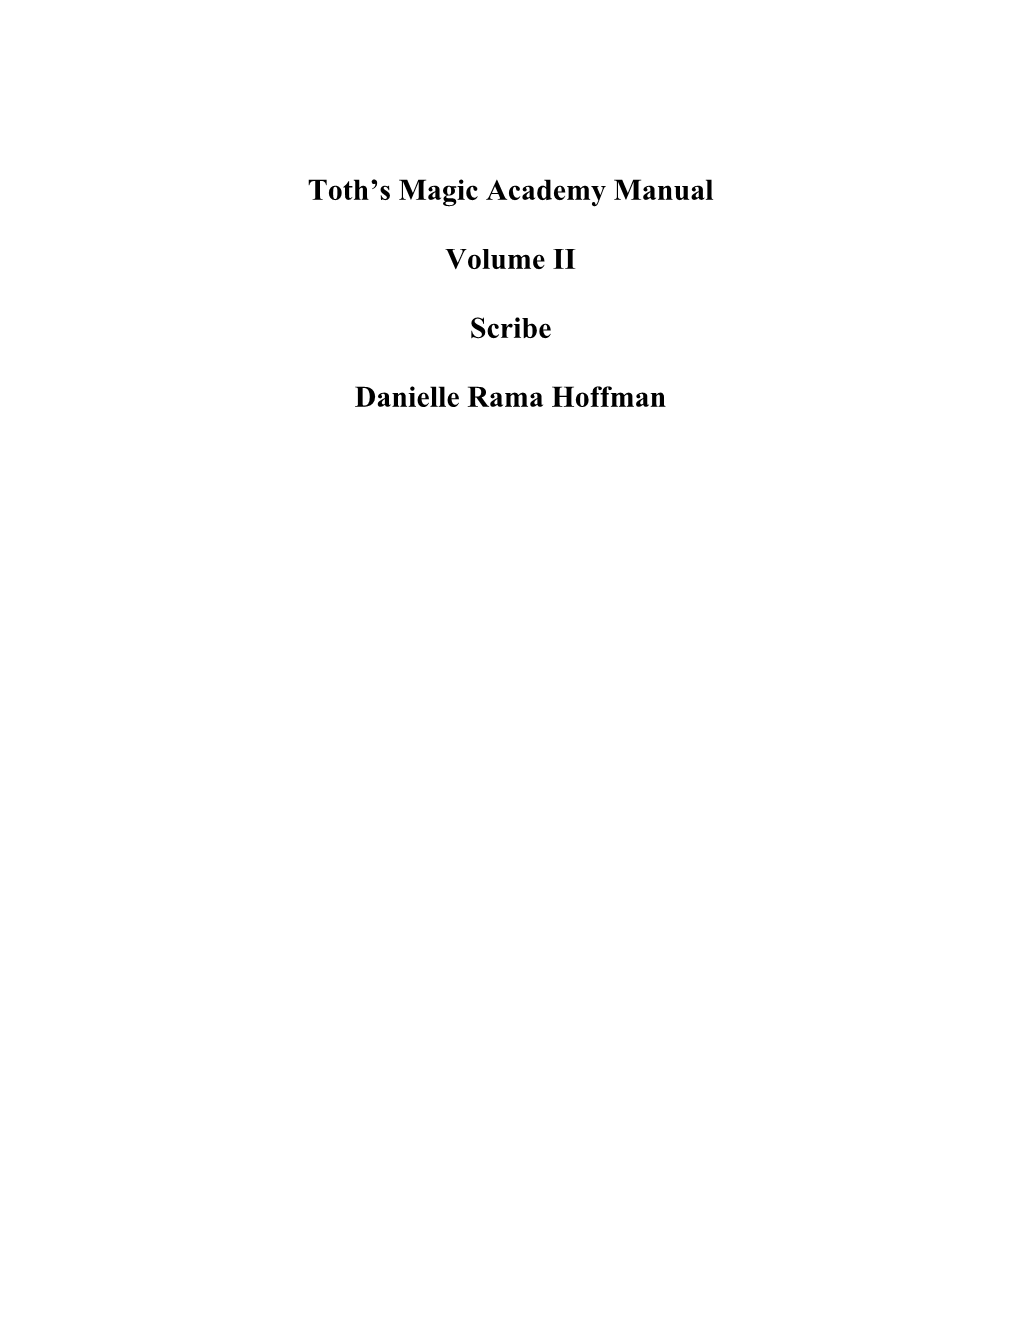 Toth's Magic Academy Manual Volume II Scribe Danielle Rama